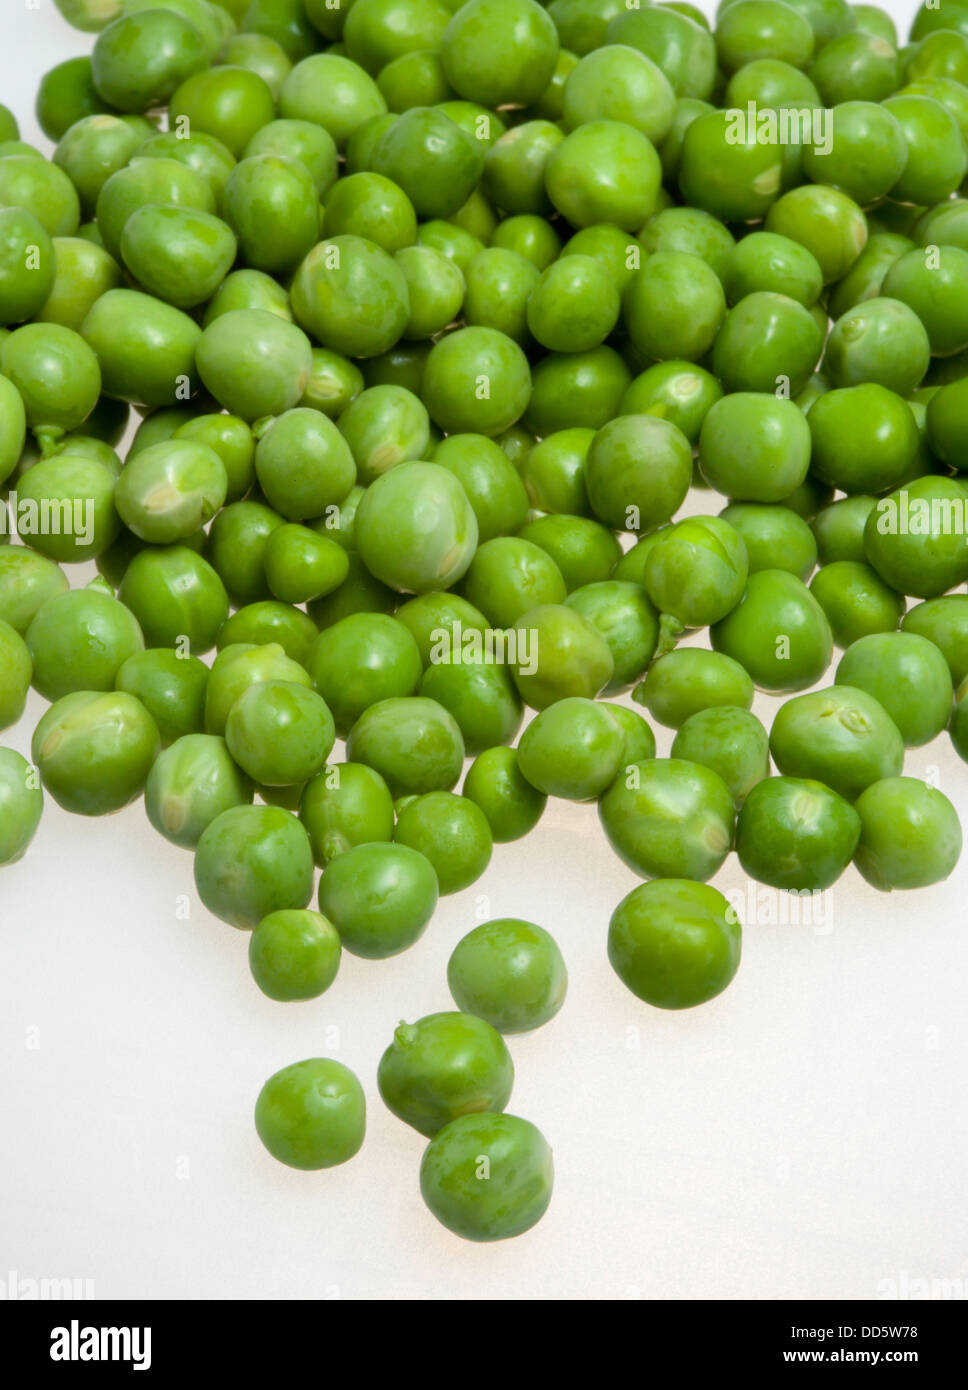 Food, Vegetables, Peas, Fresh ripe green English garden peas Pisum sativum on a white background. Stock Photo